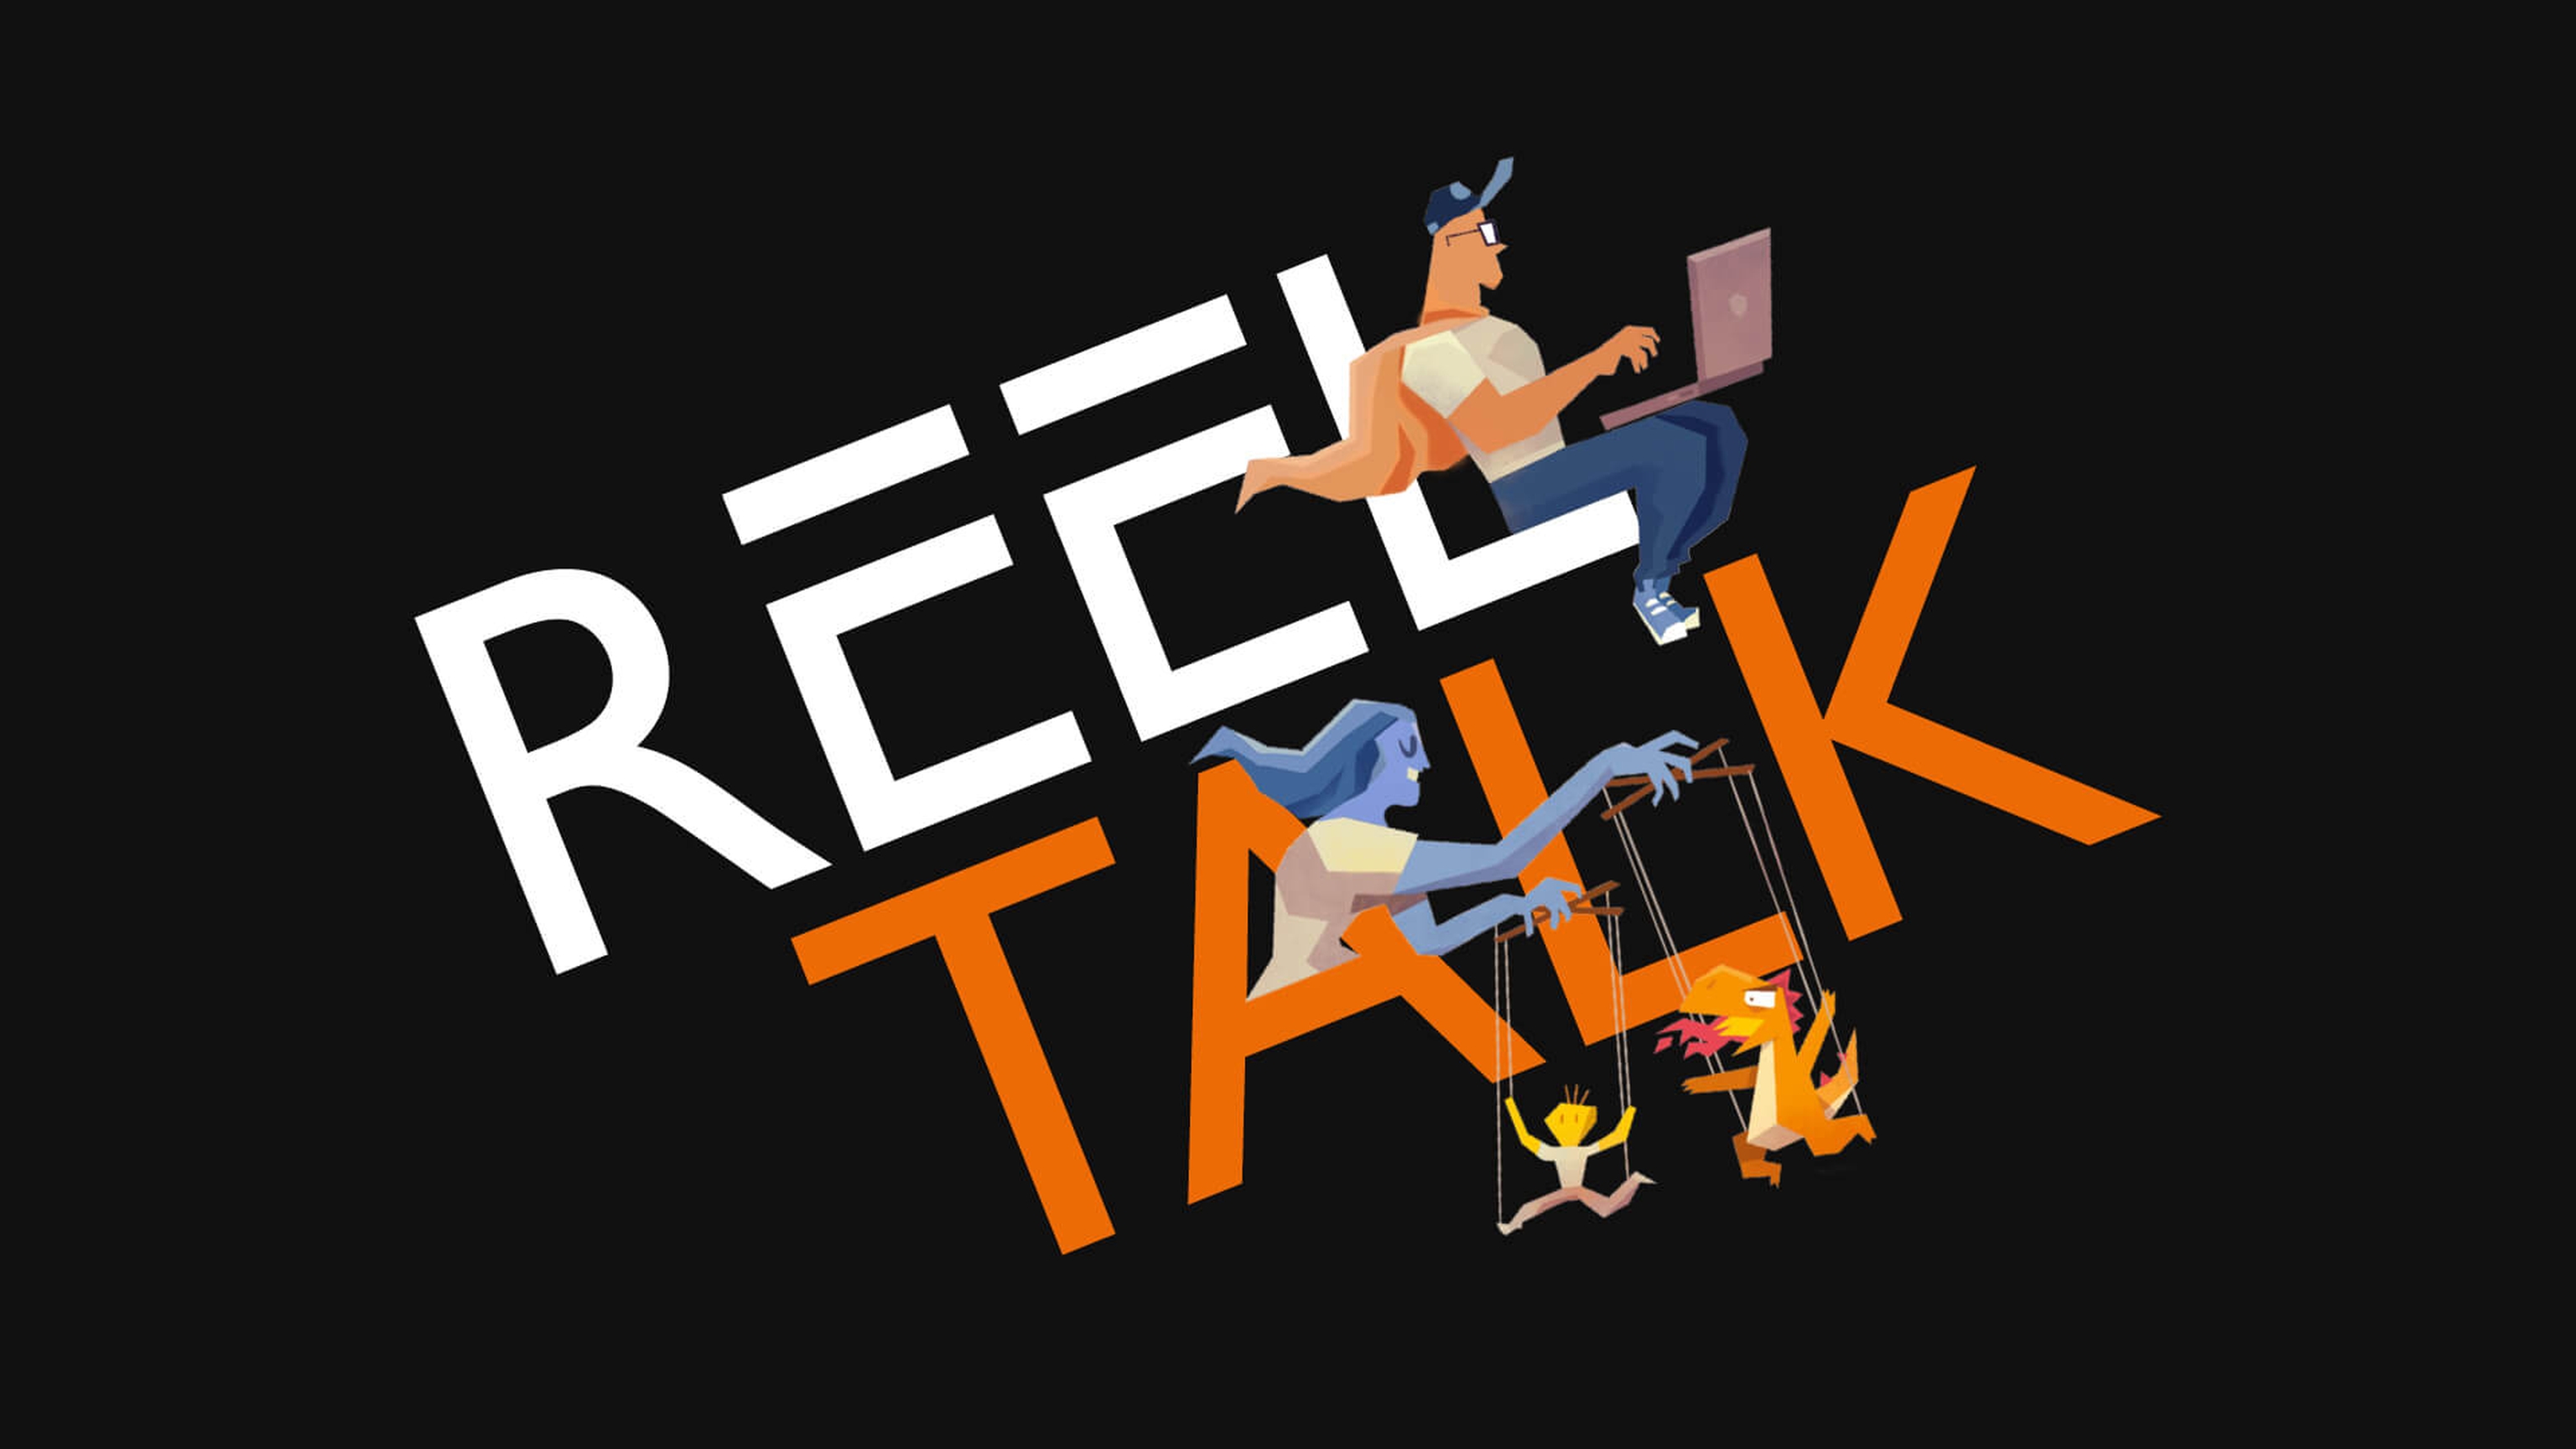 Reel talk logo on a black background